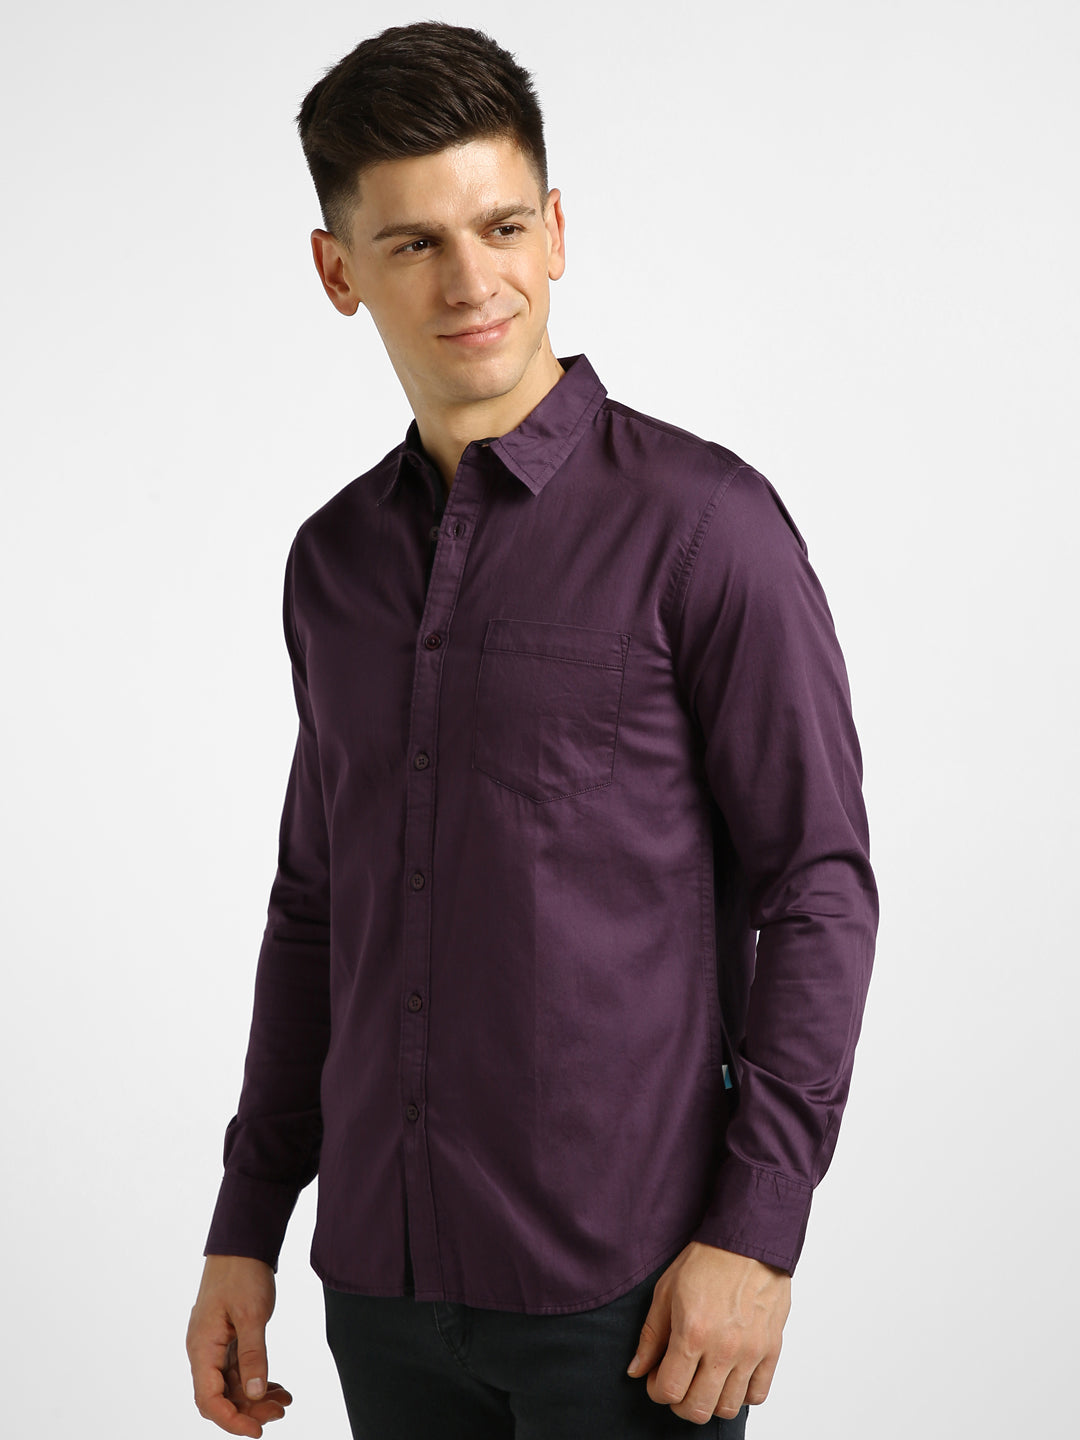 Urbano Fashion Men's Purple Cotton Full Sleeve Slim Fit Casual Solid Shirt